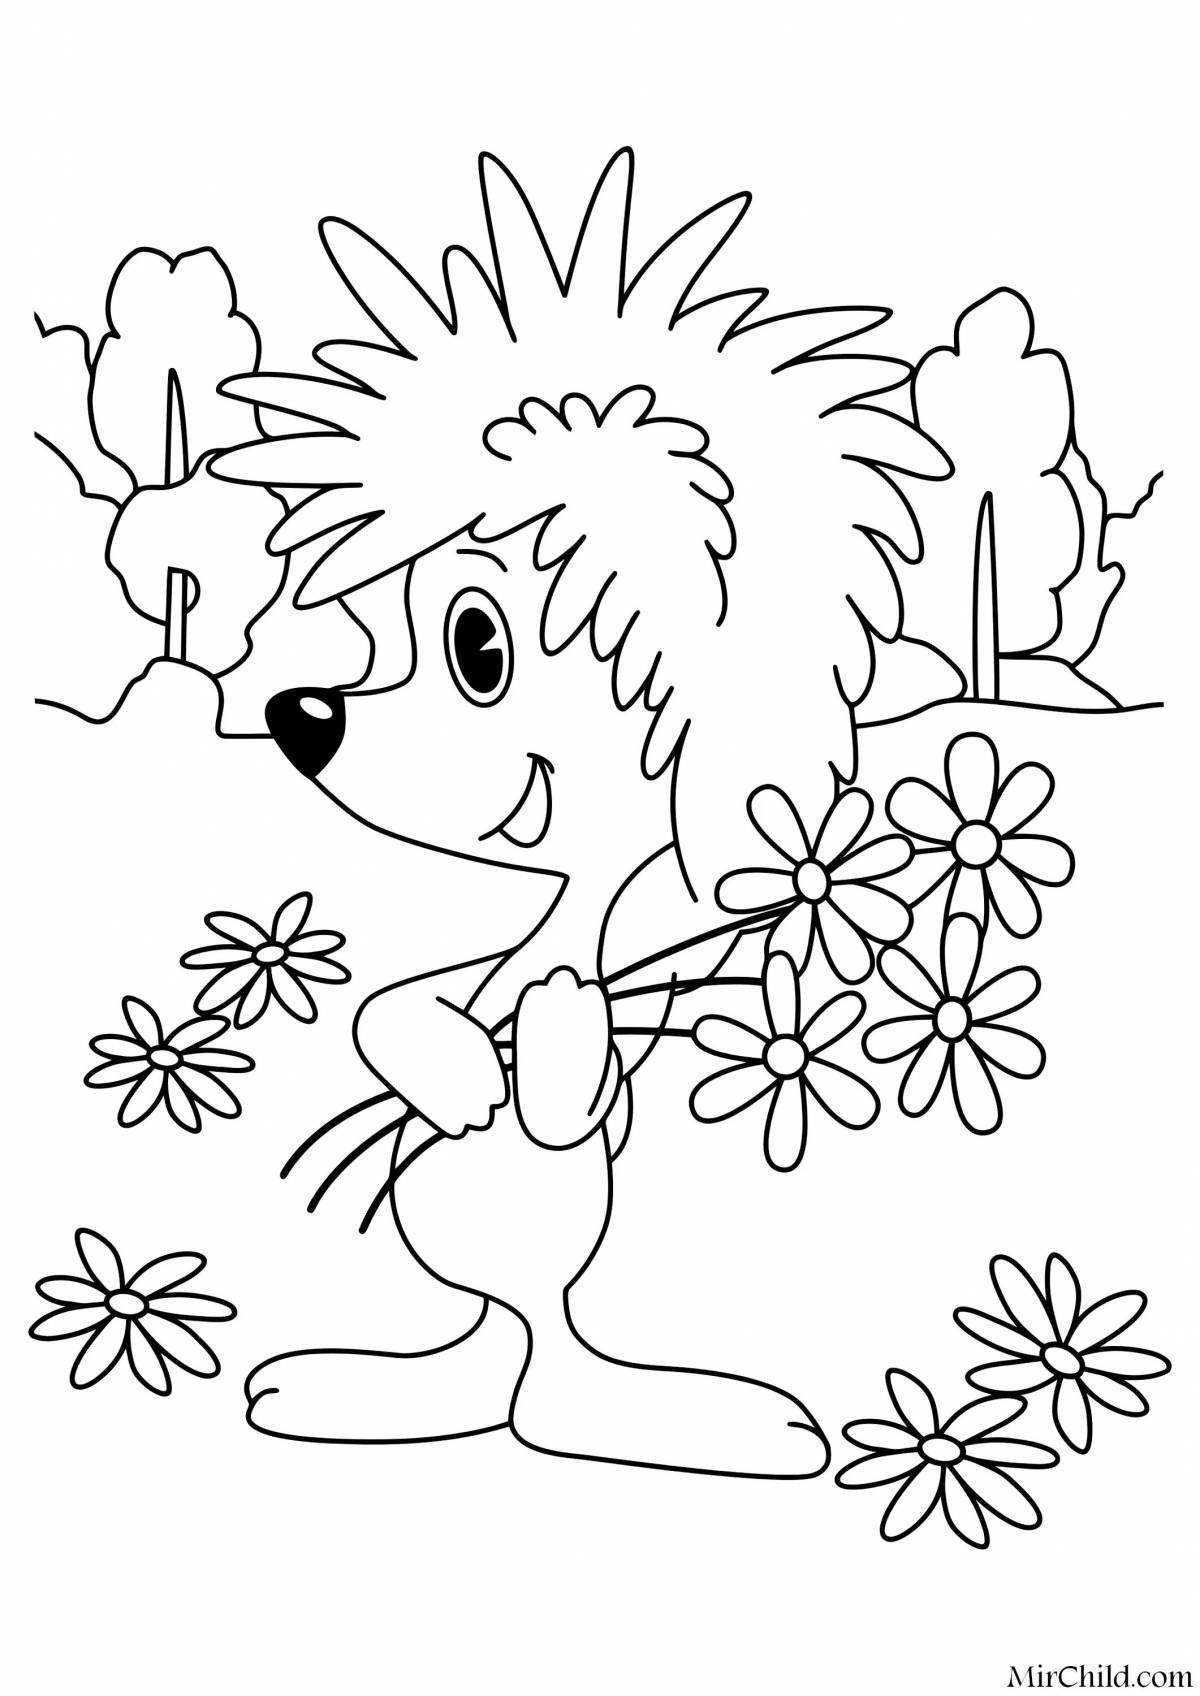 Nice hedgehog coloring book for preschoolers